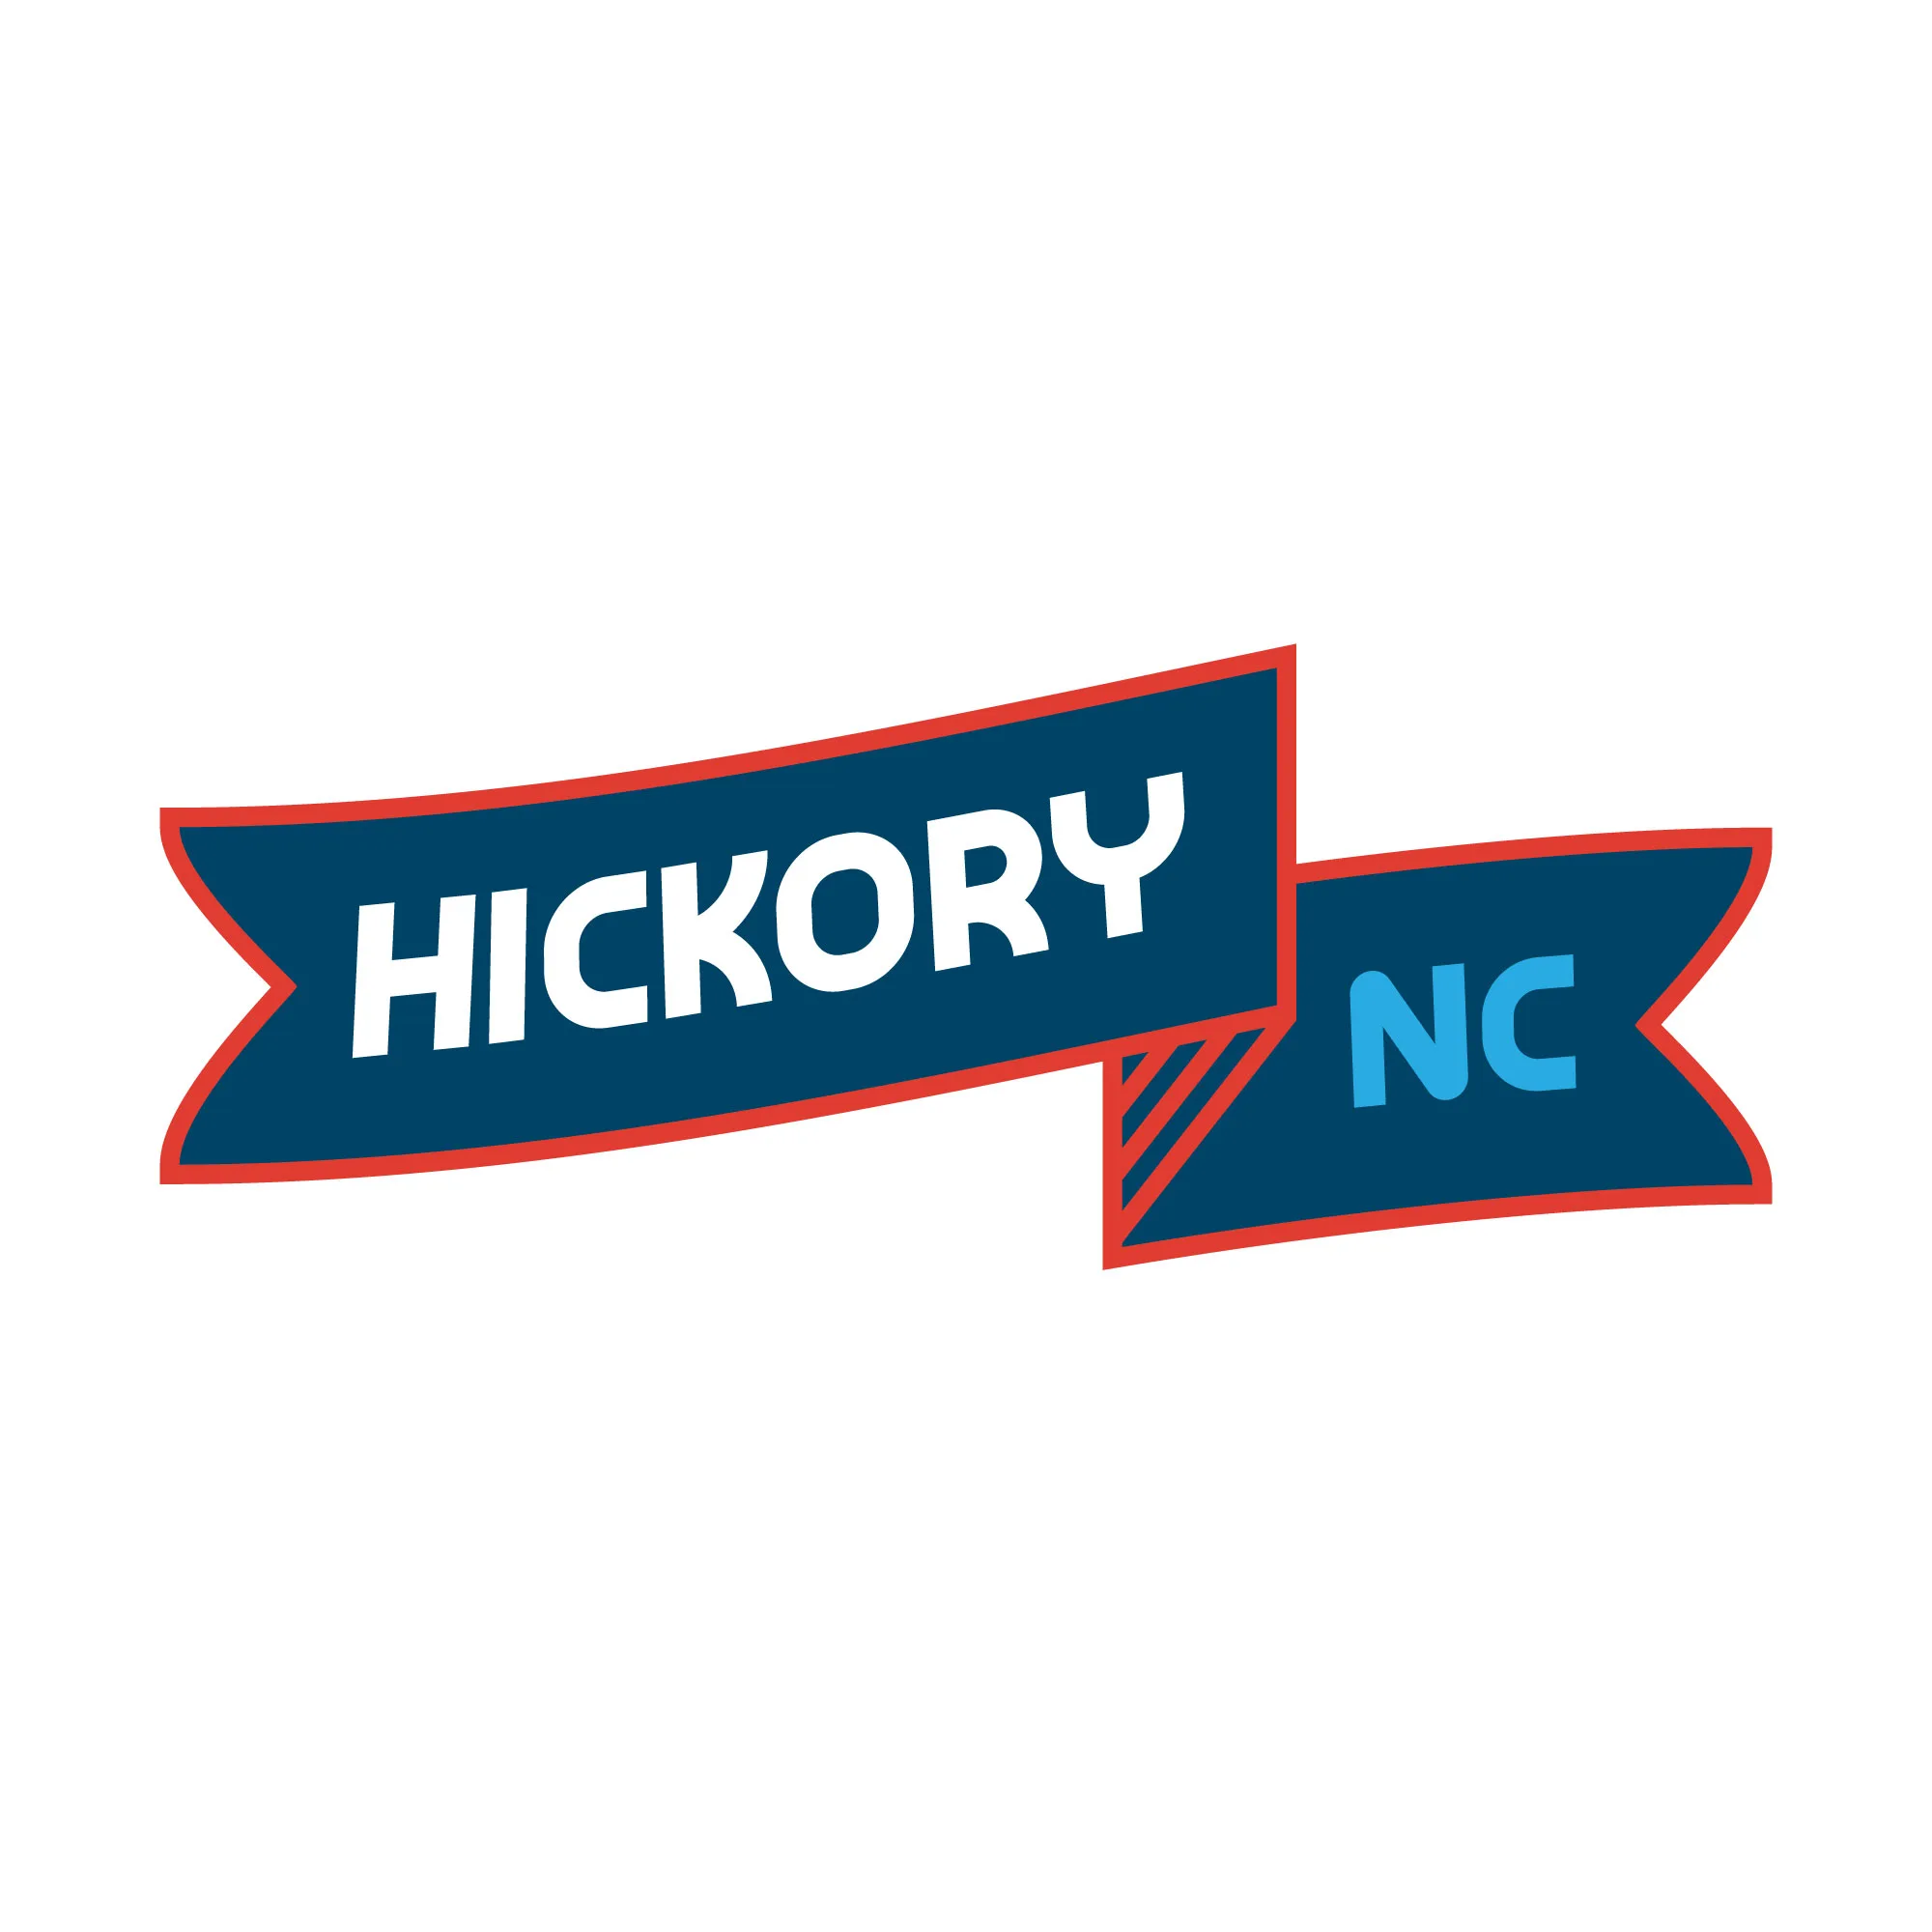 Hickory NC Banner Illustration